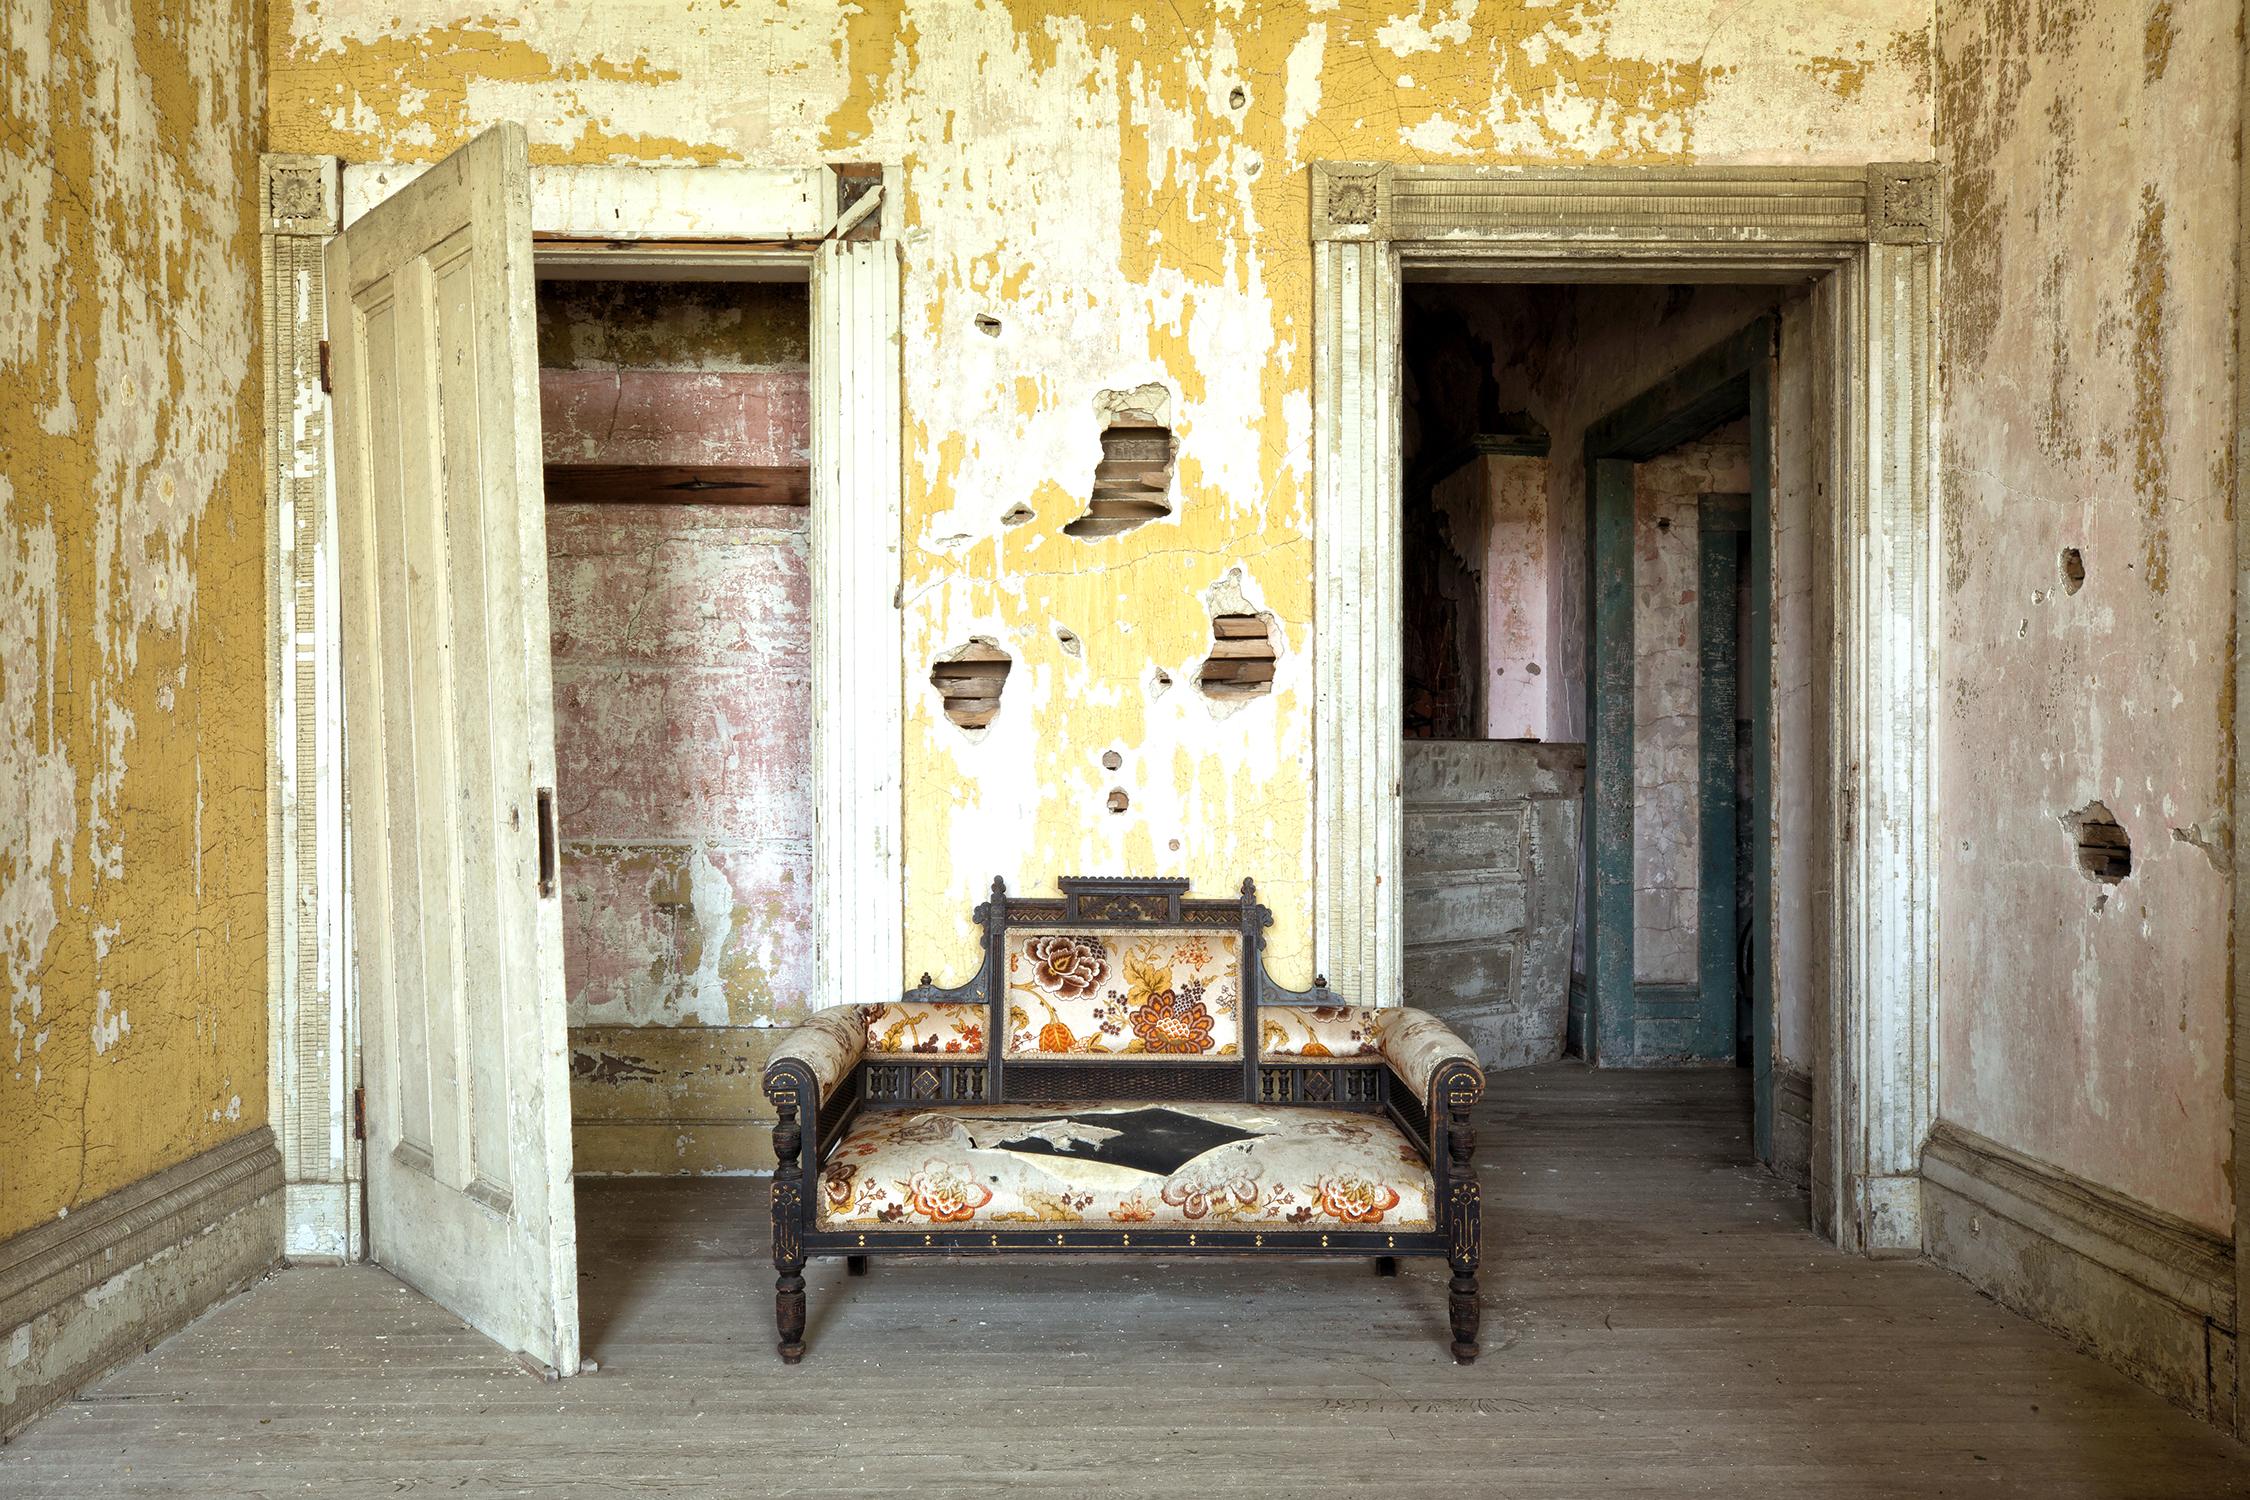 "Return", abandoned, Victorian, sofa, interior, yellow, pink, photograph